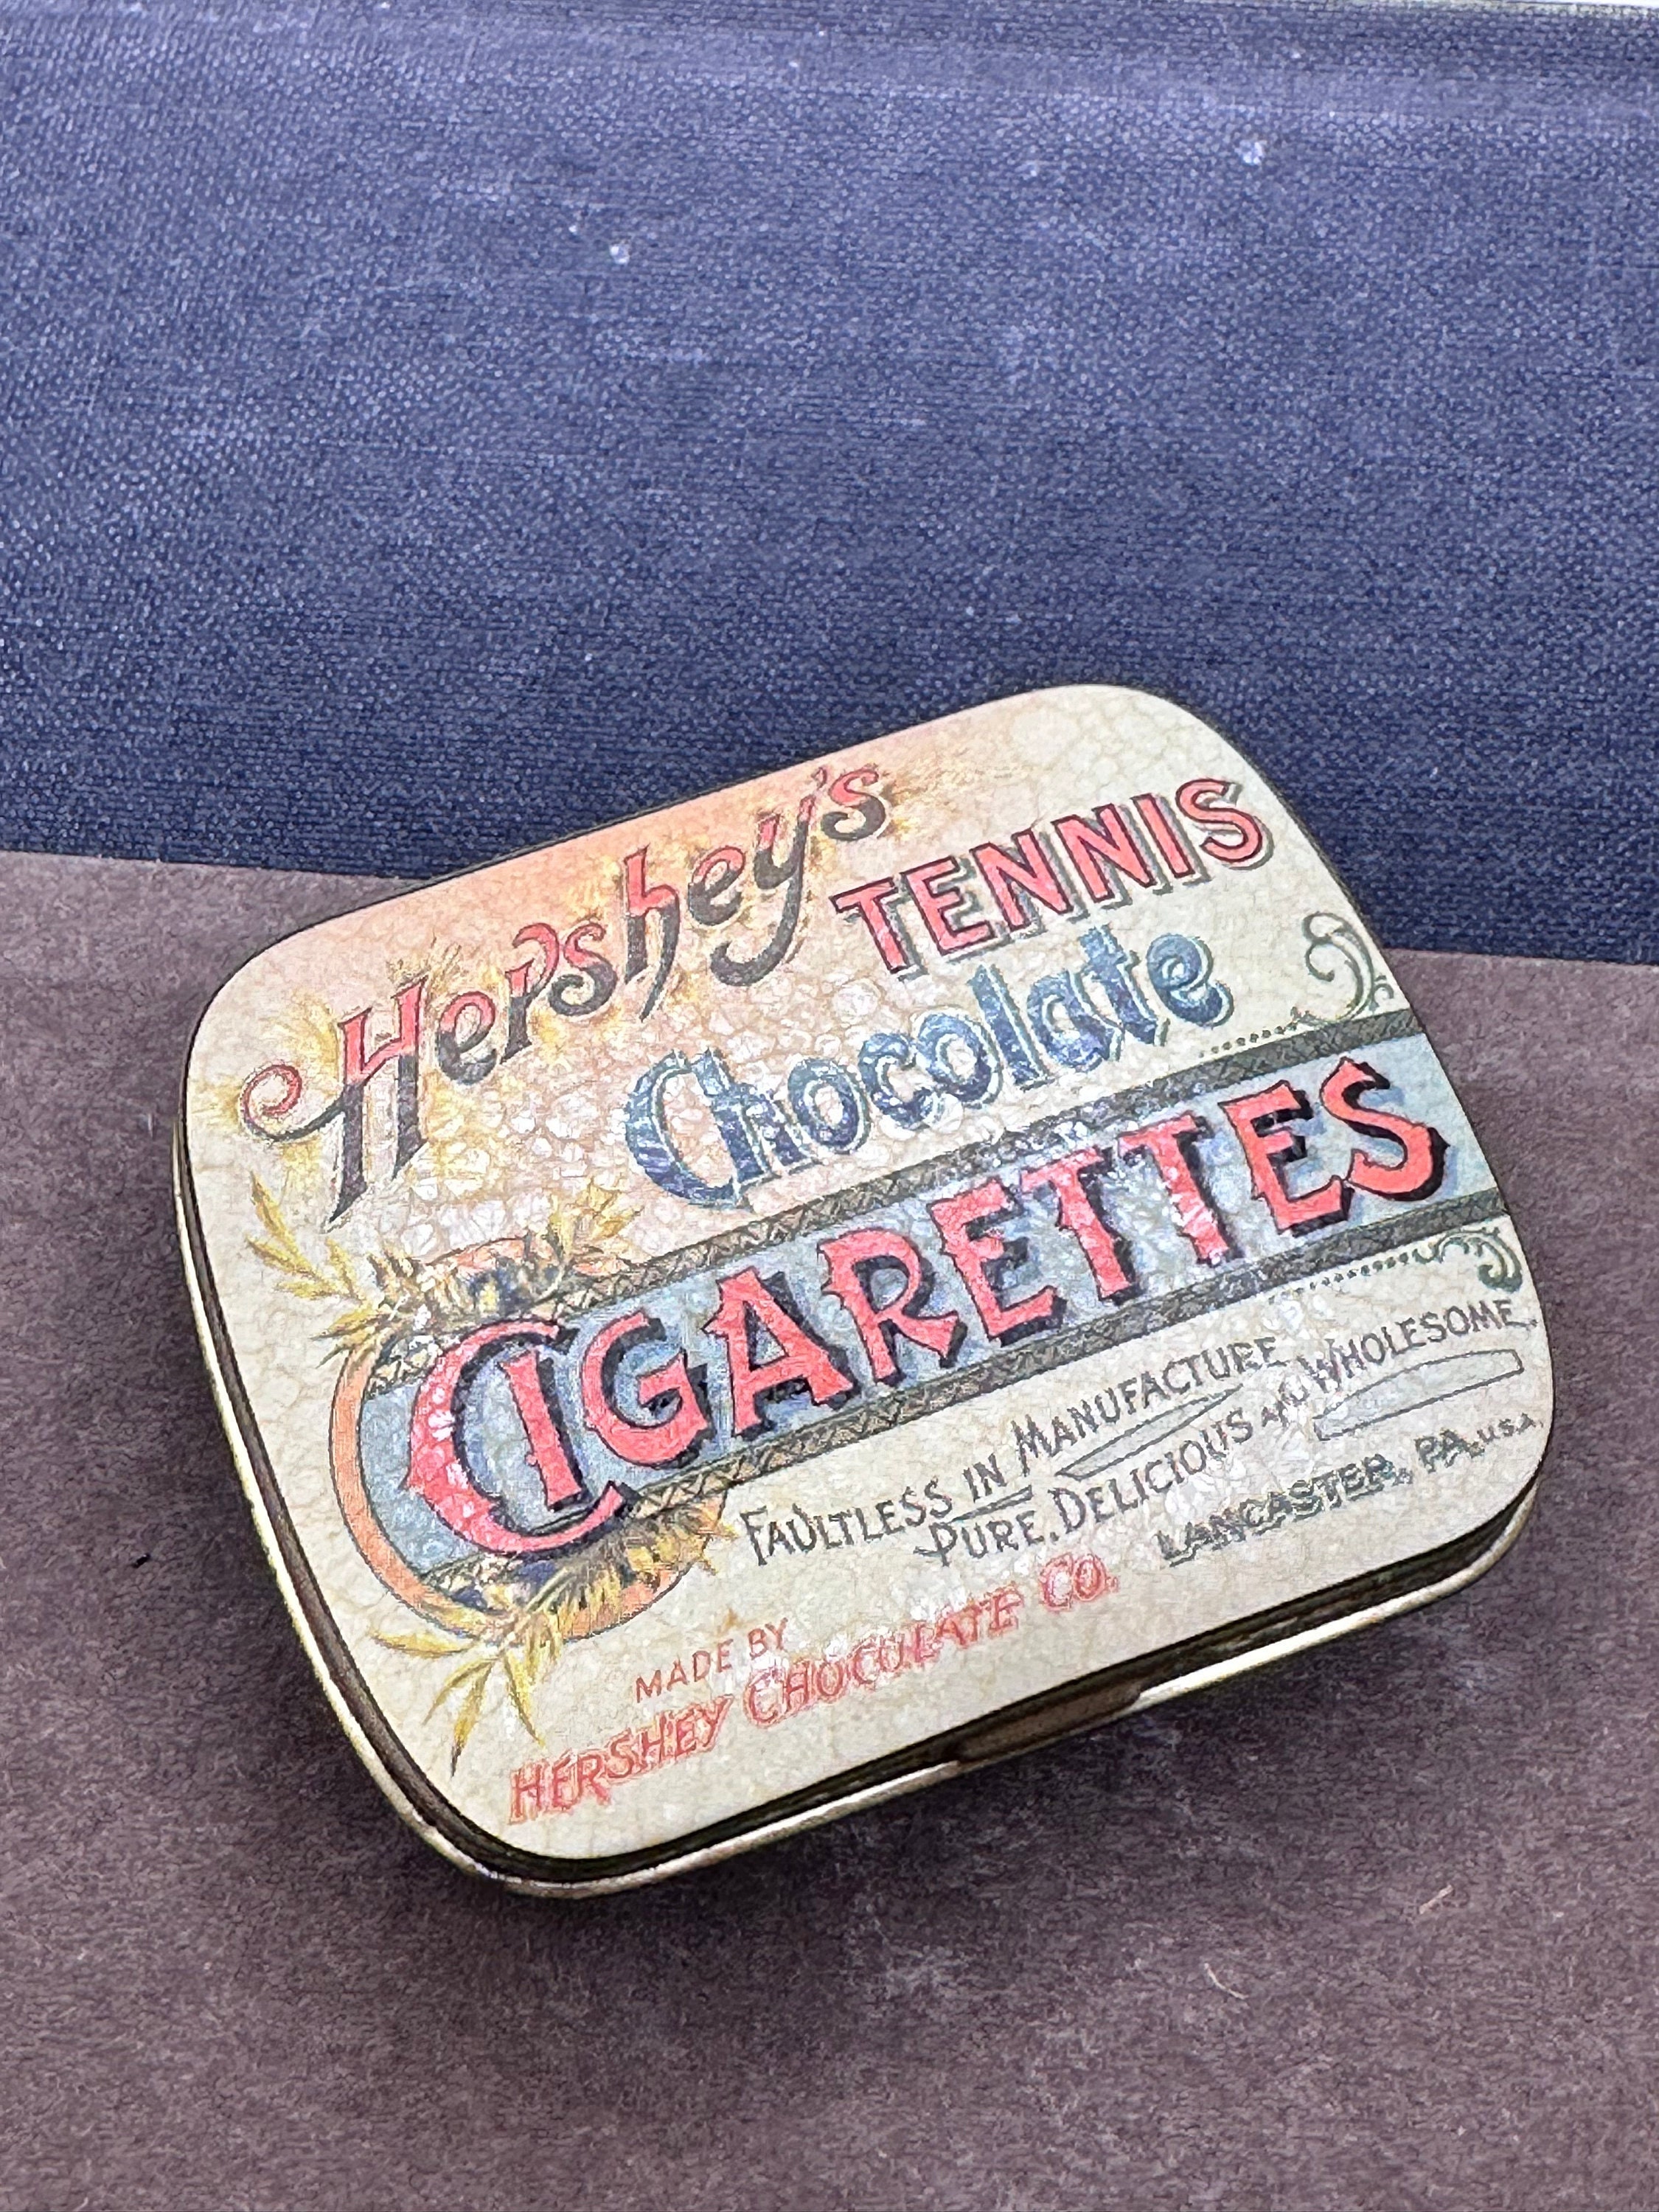 Cigarette en chocolat lot de 3 – Magic Candy